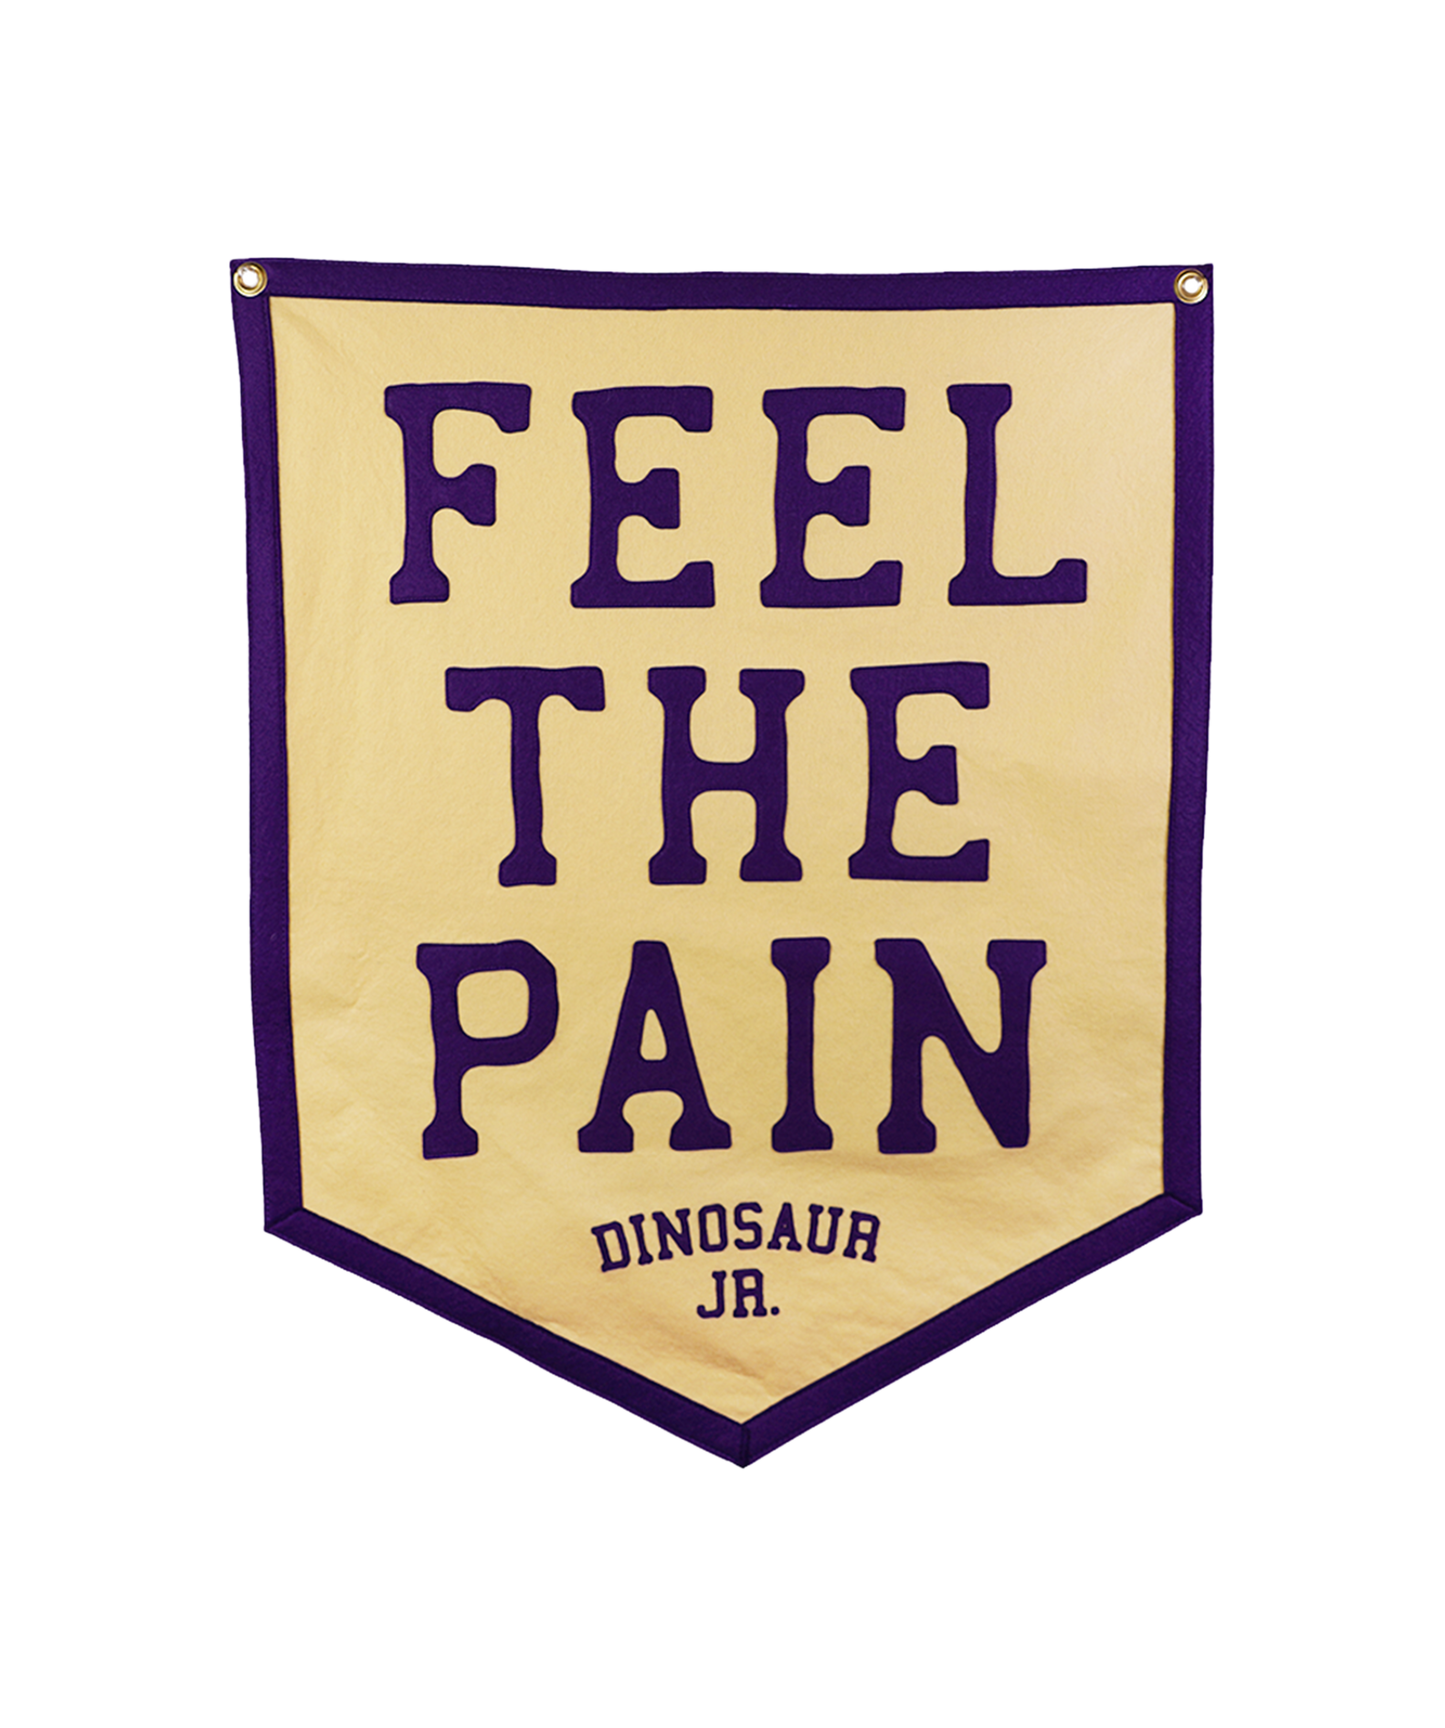 Feel The Pain Banner • Dinosaur Jr. x Oxford Pennant